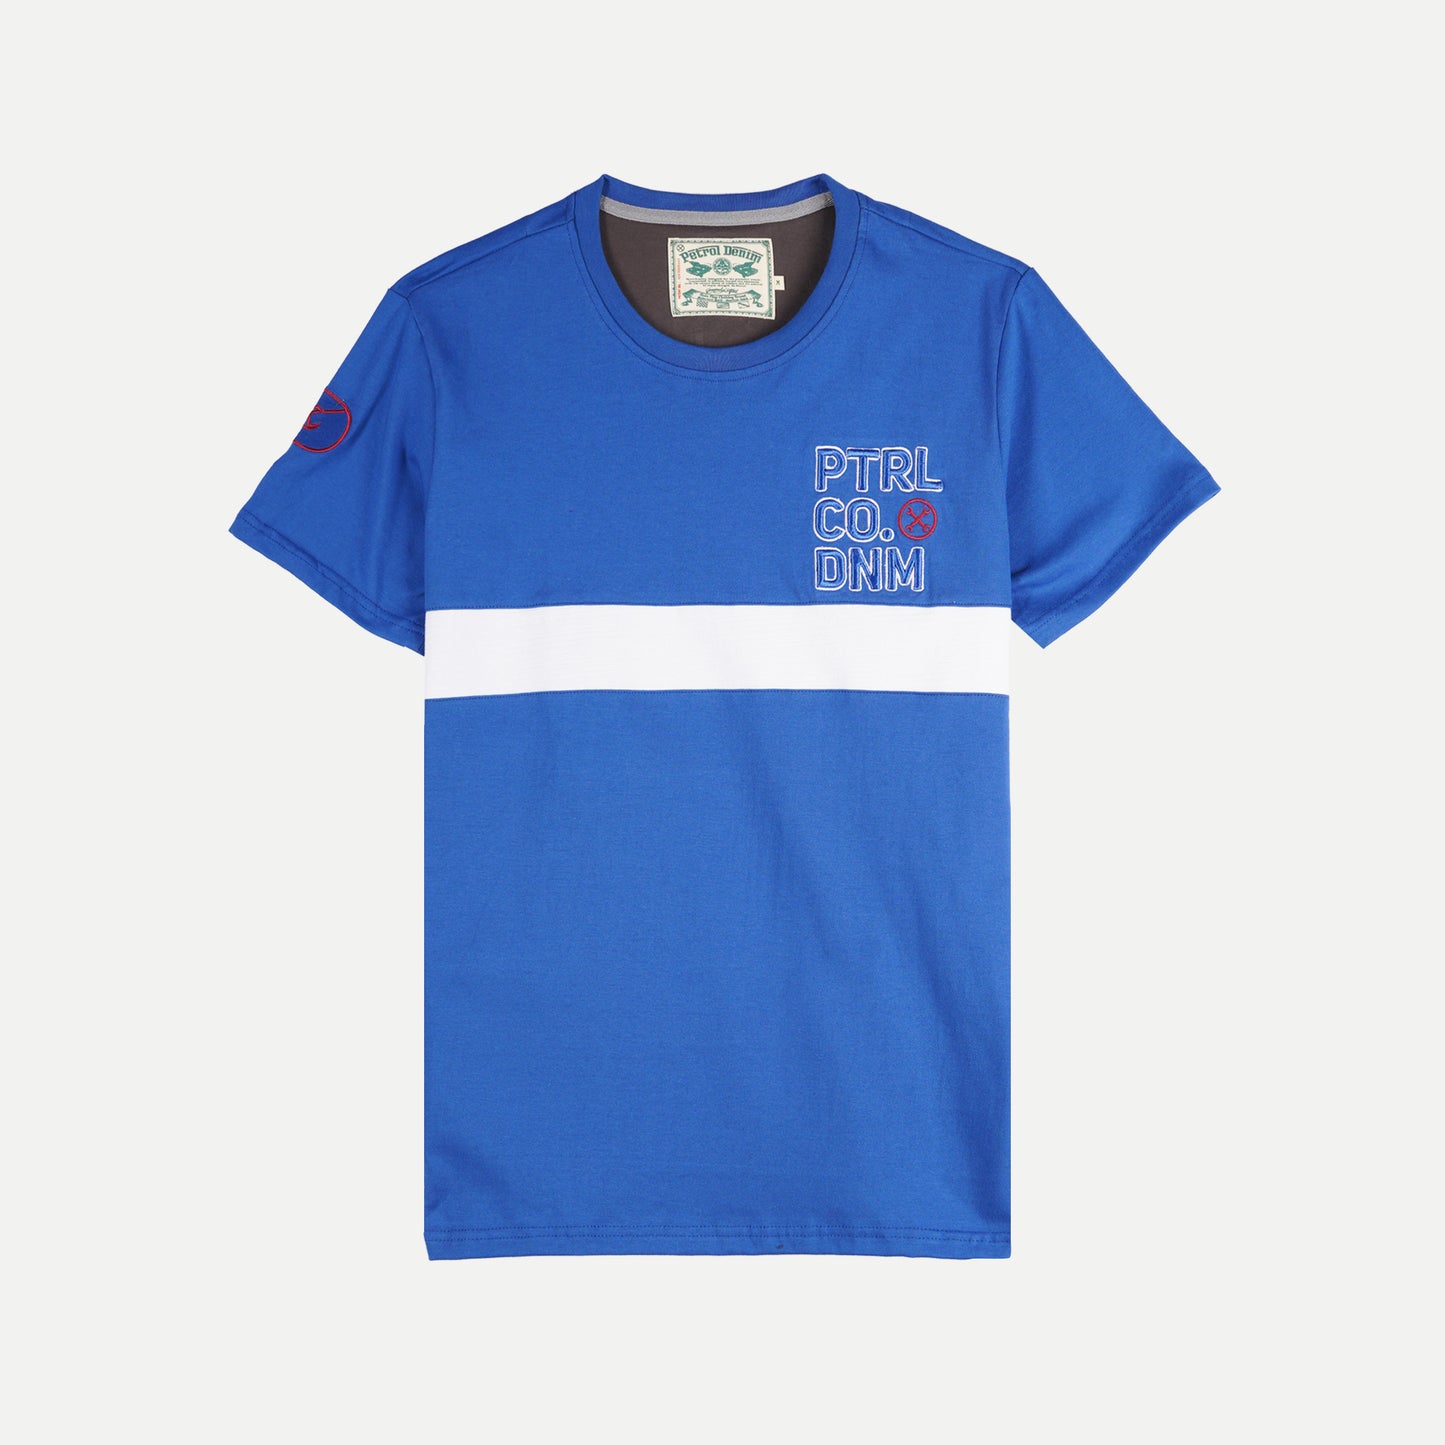 Petrol Basic Tees for Men Slim Fitting Shirt Trendy fashion Casual Top True Blue T-shirt for Men 39684 (True Blue)